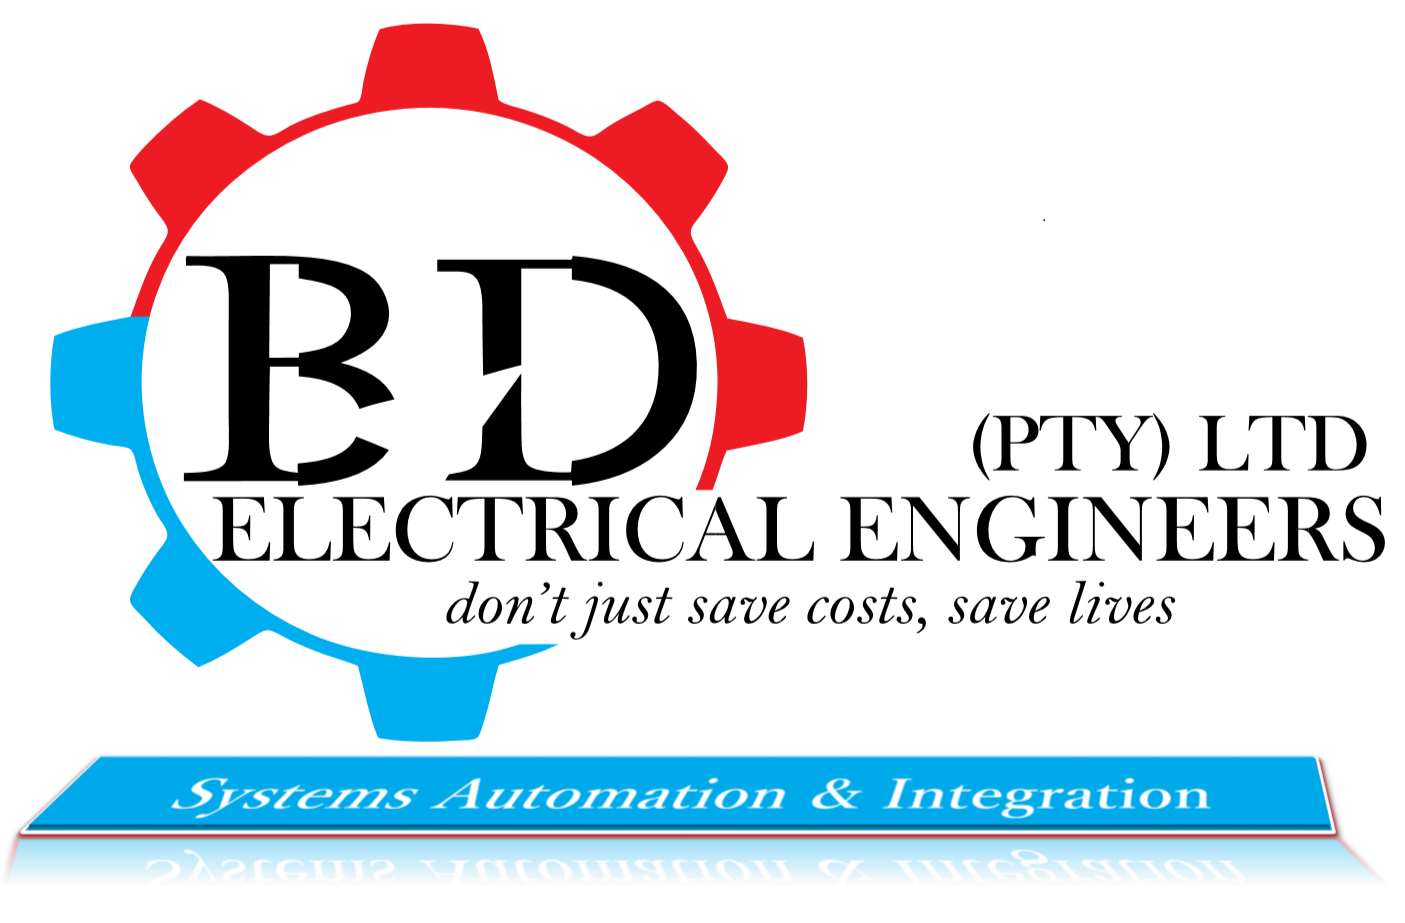 BD Electrical Engineers (Pty) Ltd (Unverified) logo